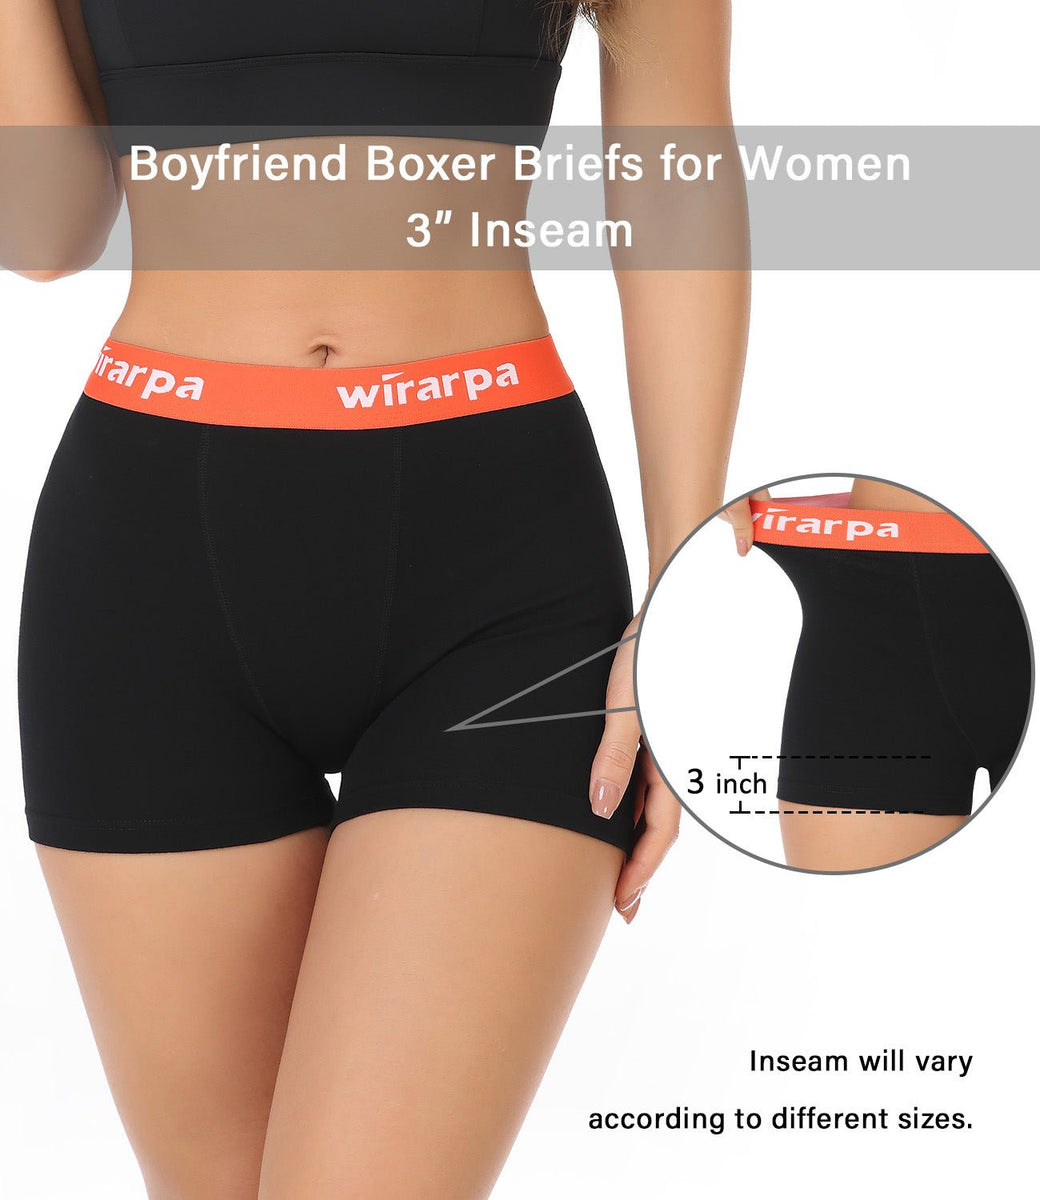 Women's Boxer Briefs and Anti-Chafing Underwear